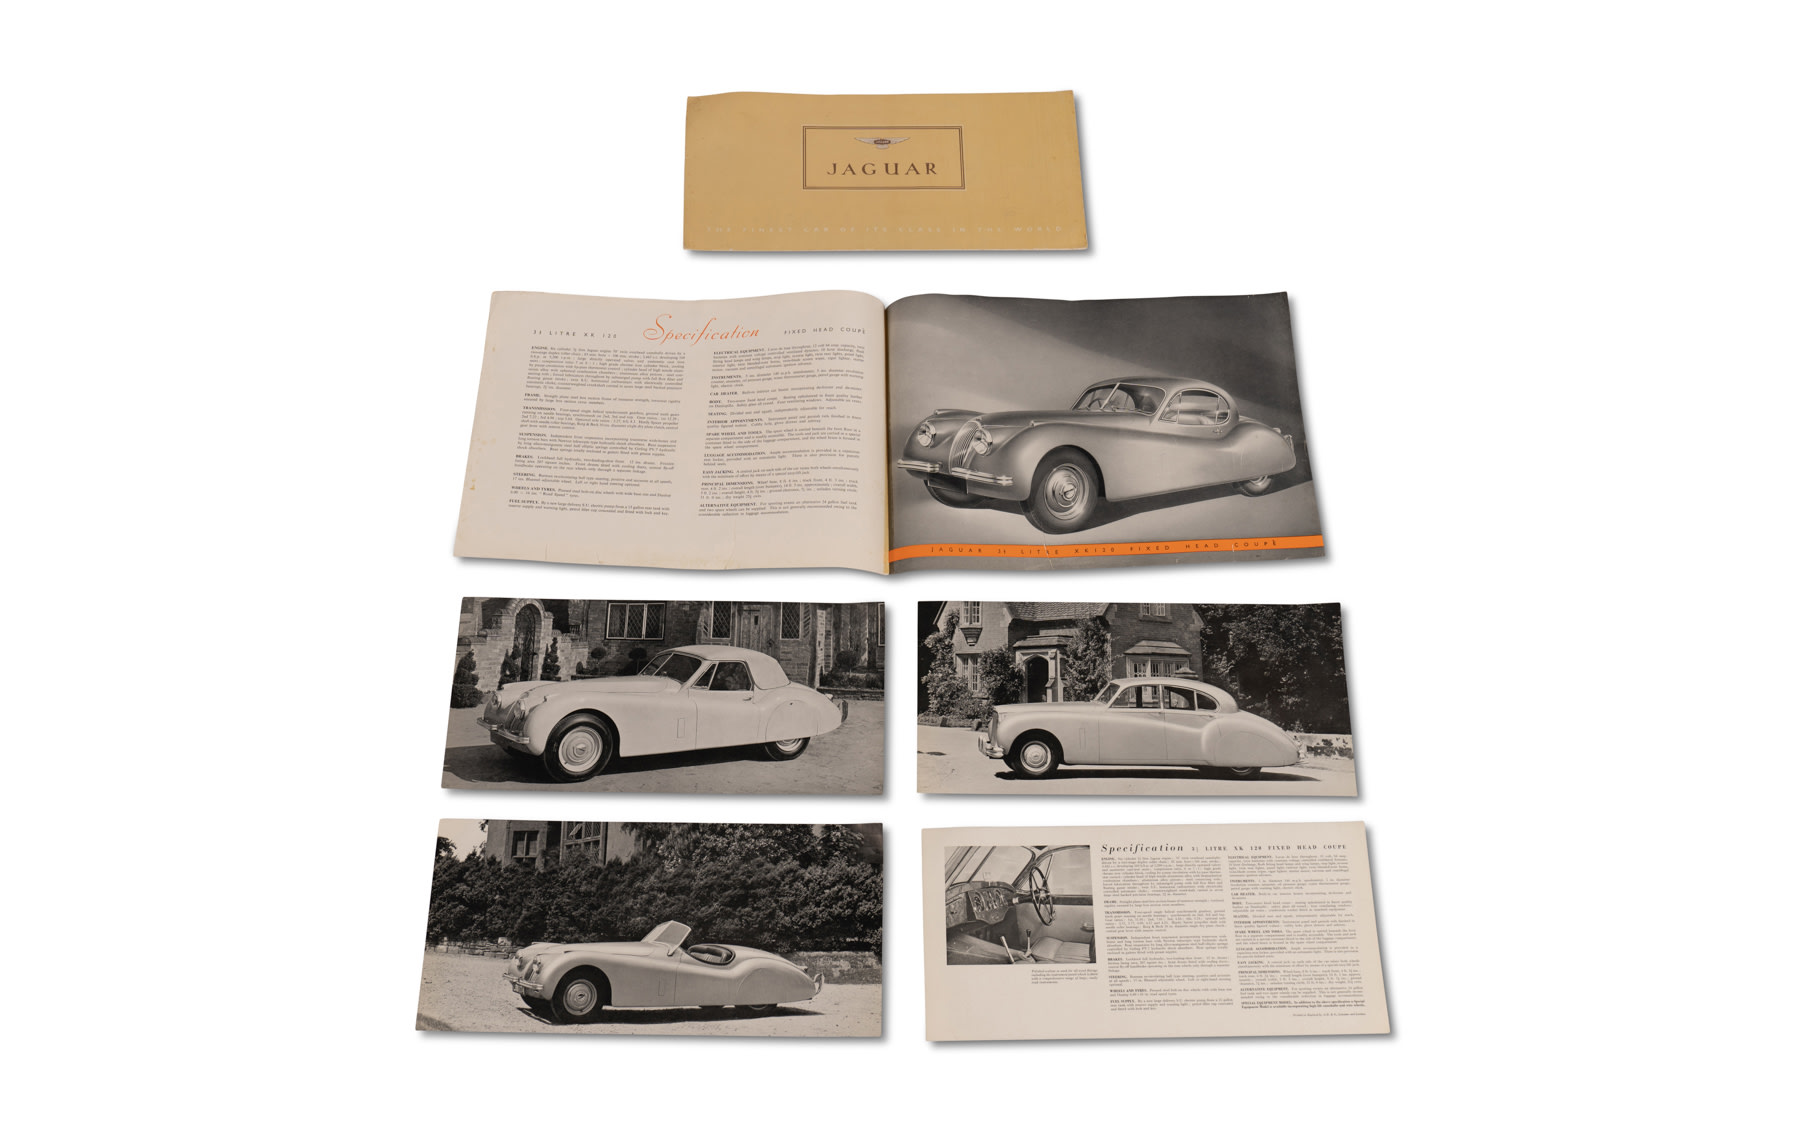 Jaguar XK120 Sales Brochure and Press Photos